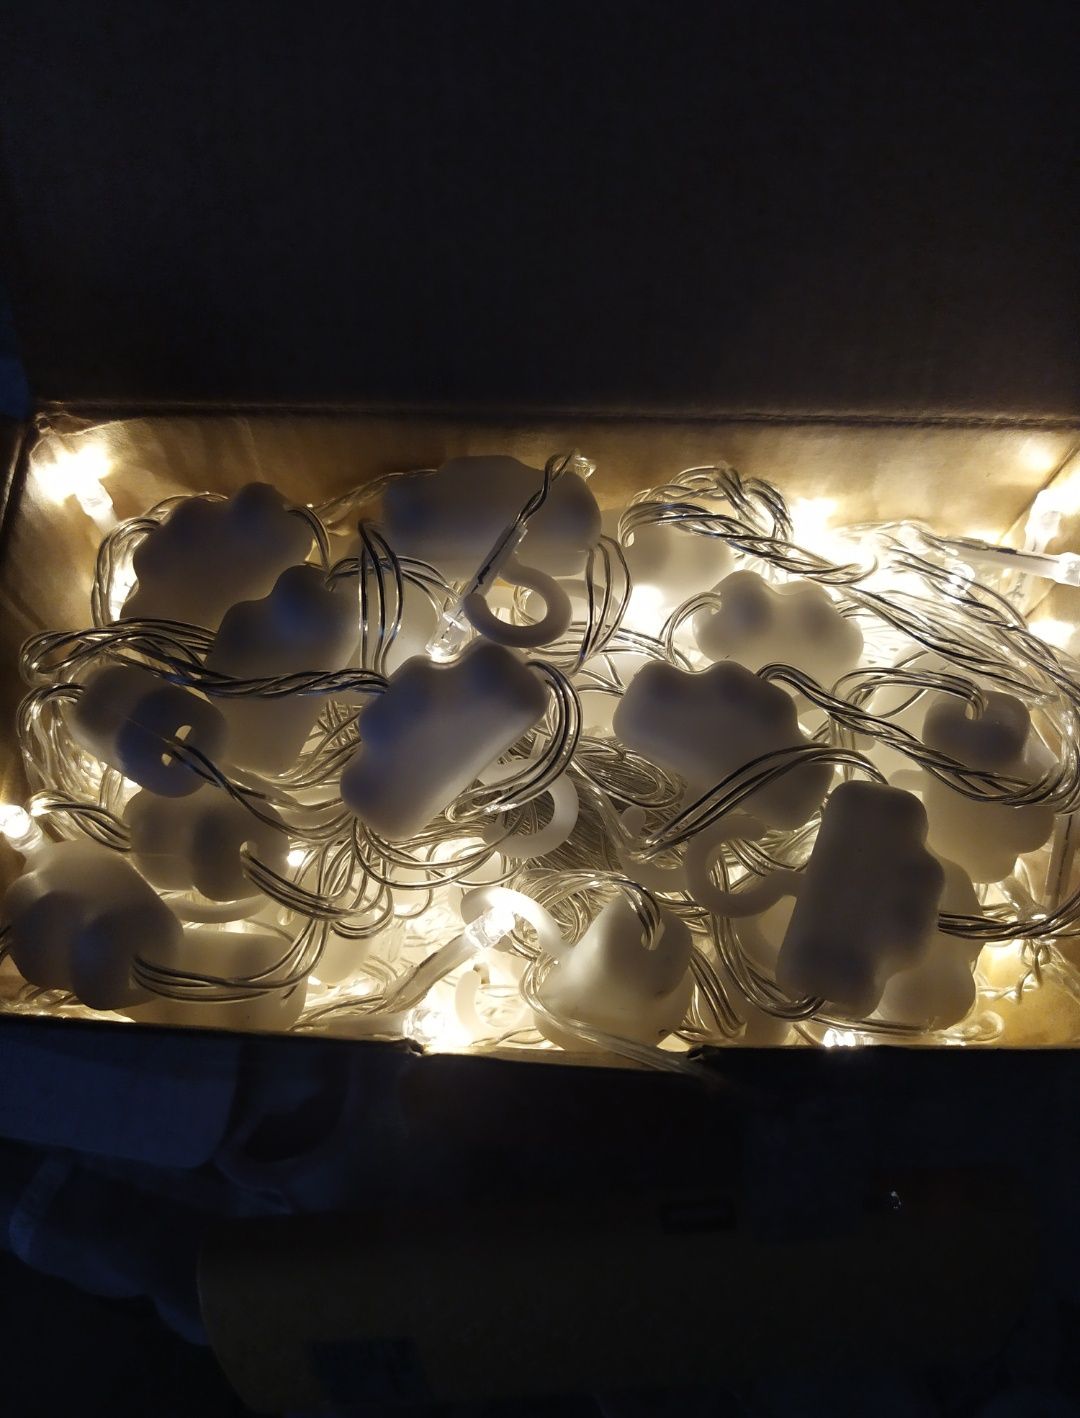 Lampki LED Blomwin Nowe